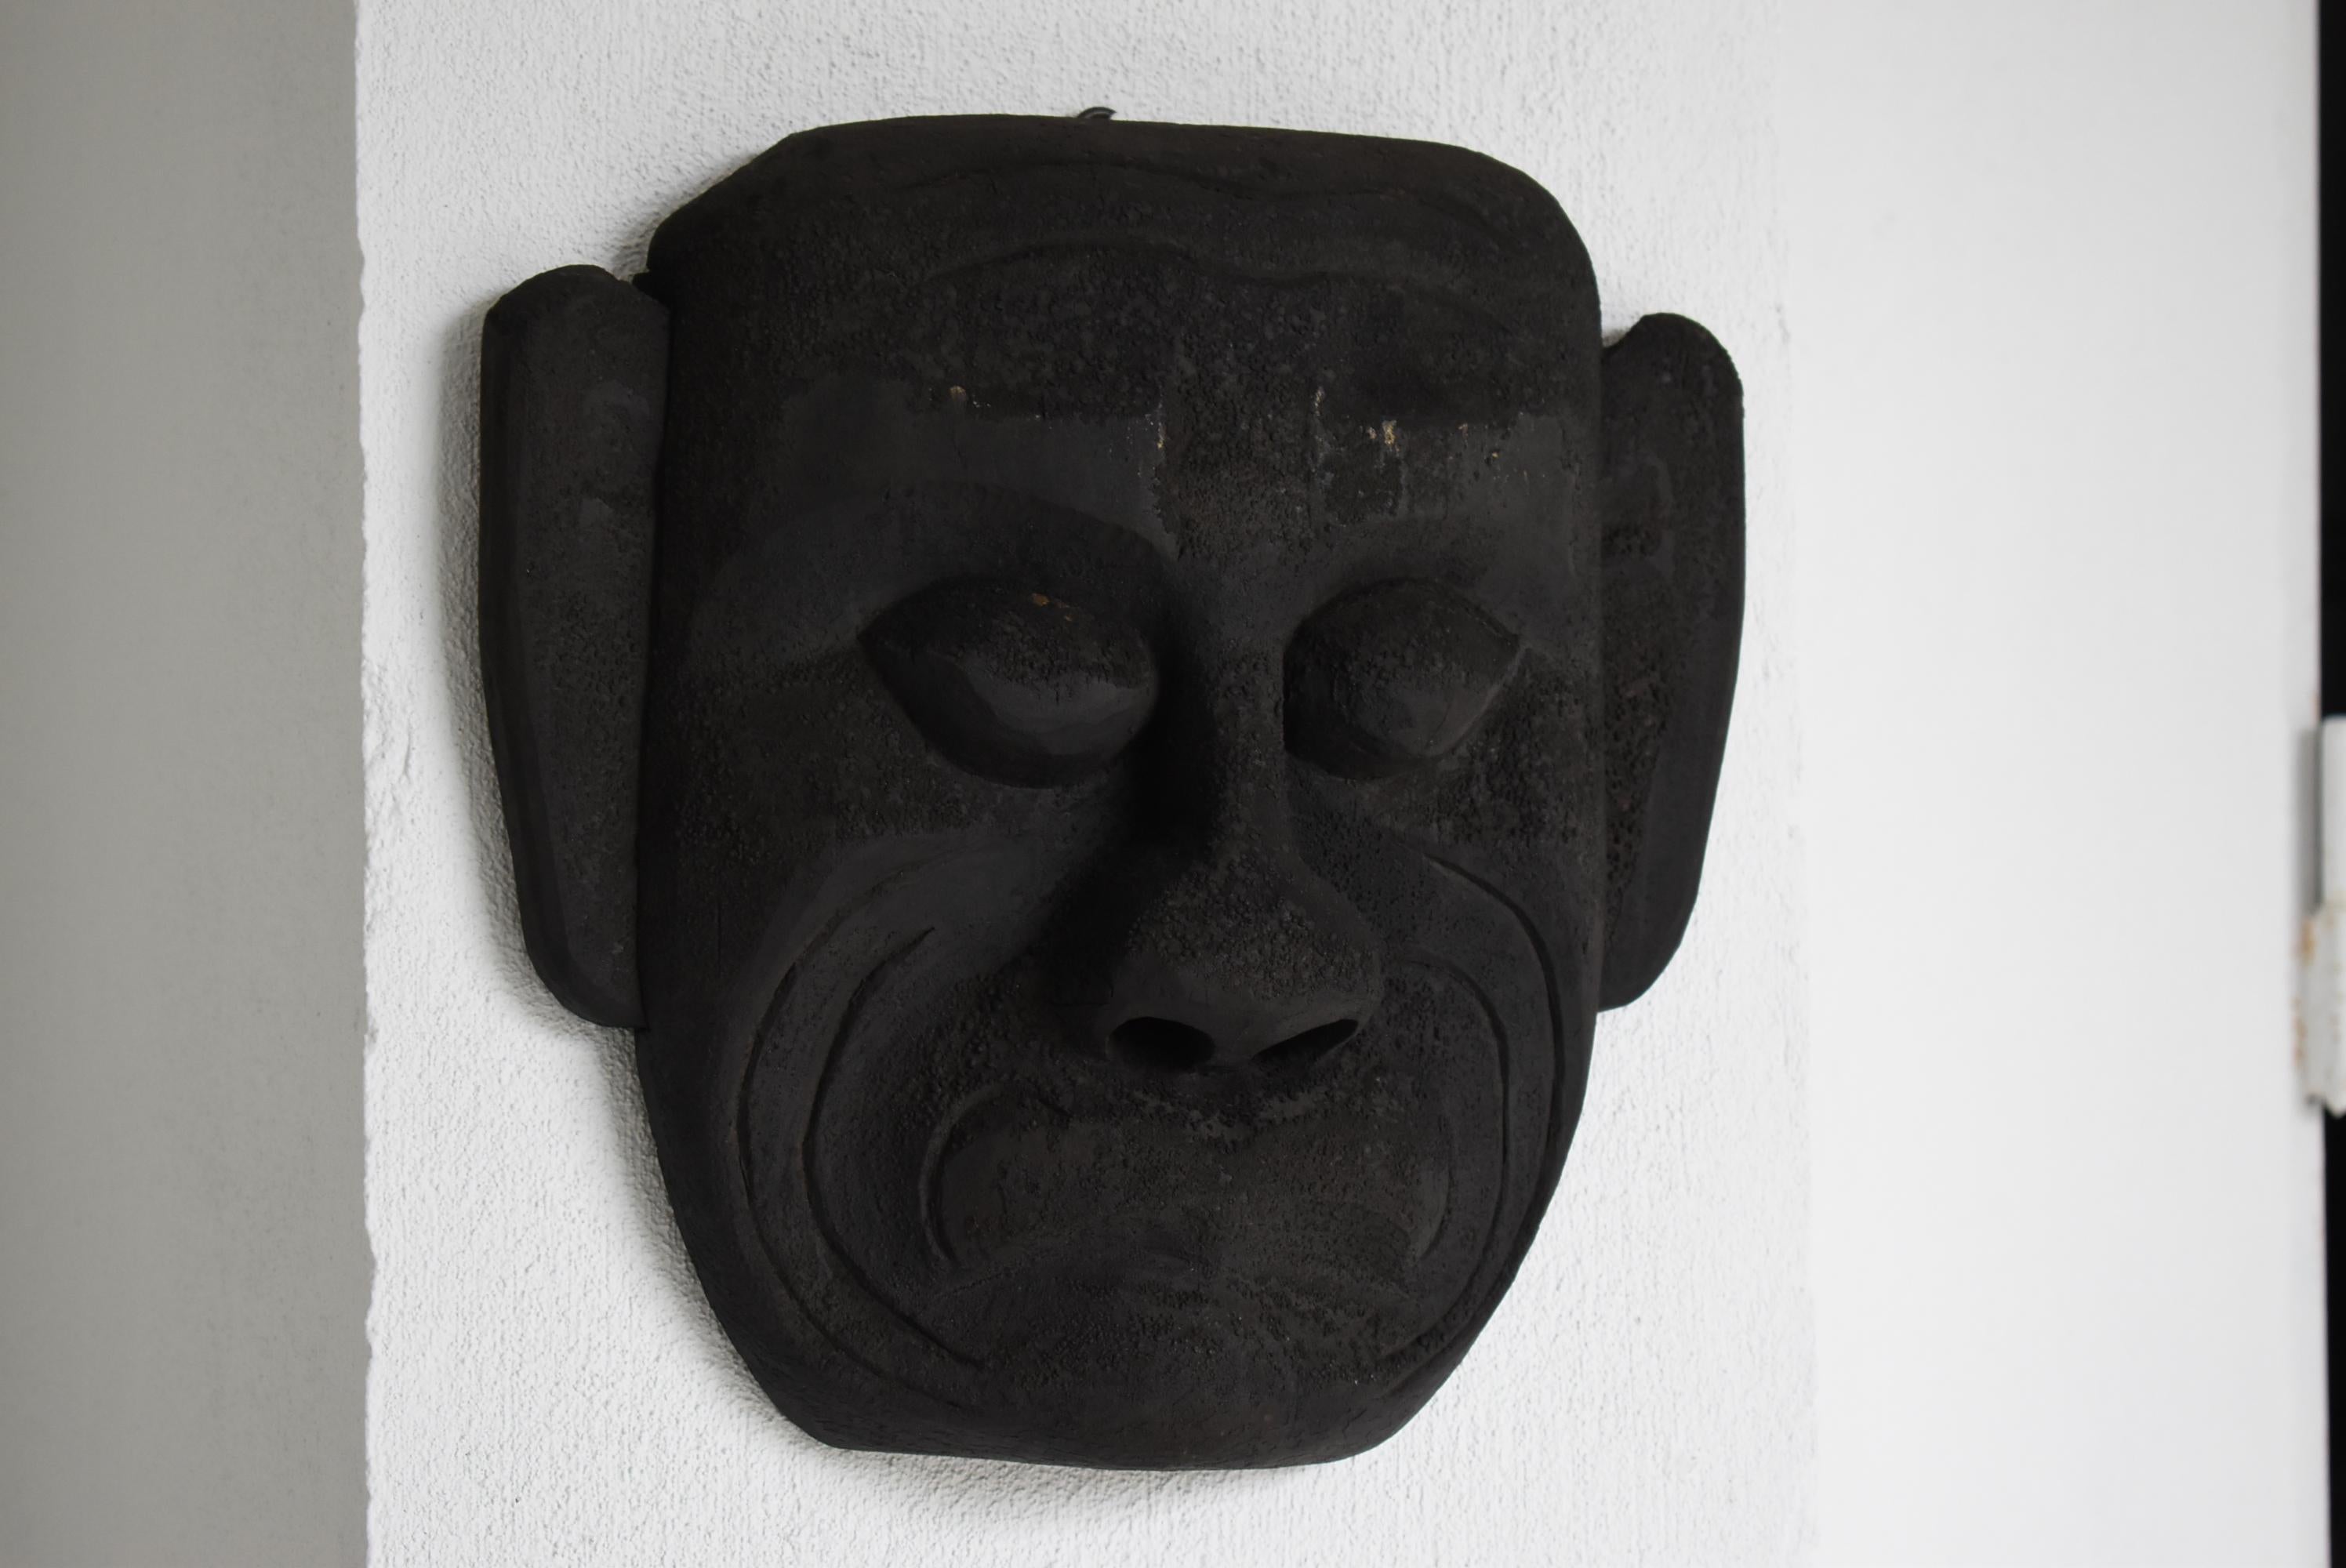 Japanese Old Wood Carving Mask 1800s-1860s/Folk Art Sculpture Wabisabi Object 1